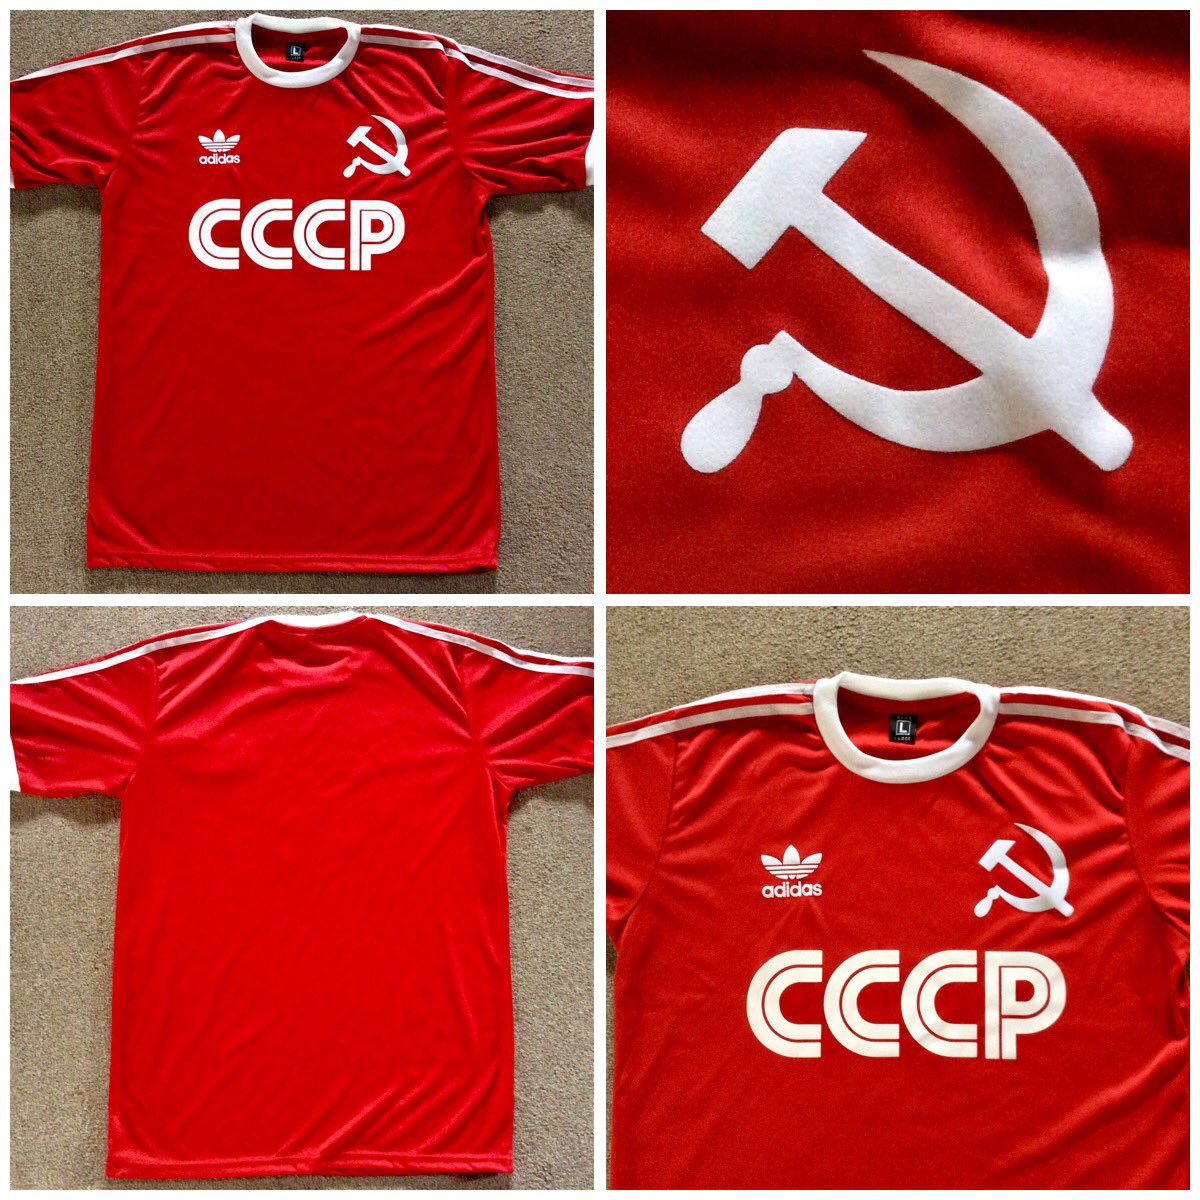 ⚽️ Mundial Retro camisetas 🇦🇷 on Twitter: "#cccp #urss #mundial #exrusia Ventas: https://t.co/SVJLNGxq4k Facebook: Mundial Retro Precio: https://t.co/VoSZJD2AY0" Twitter